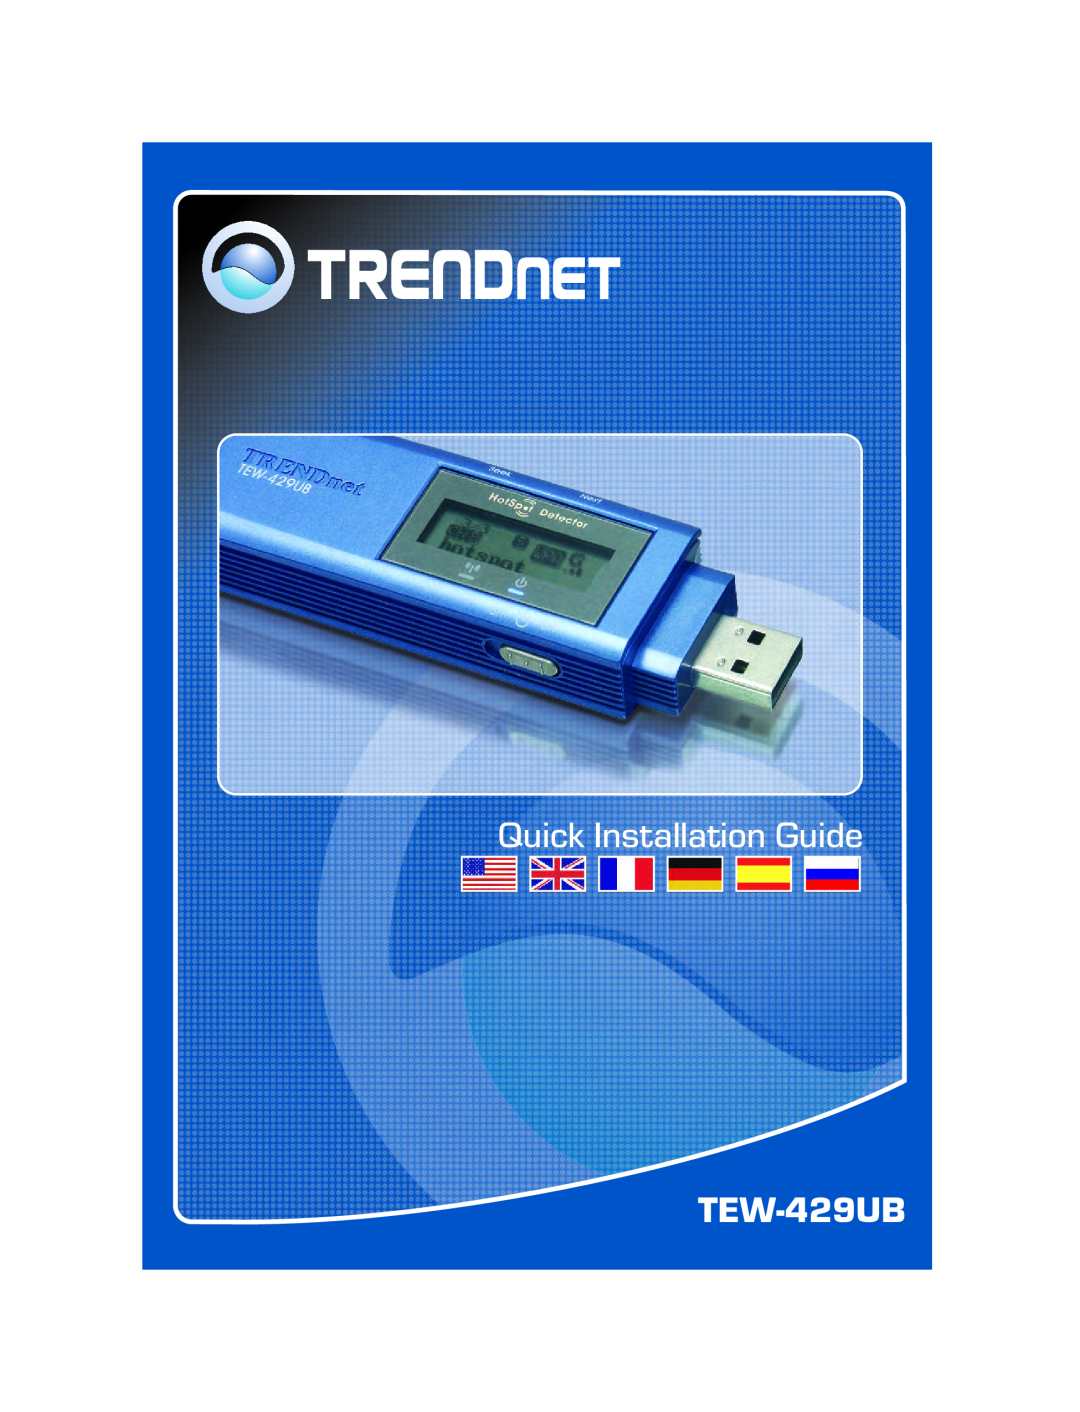 TRENDnet TEW-428UB manual Quick Installation Guide, TEW-429UB 